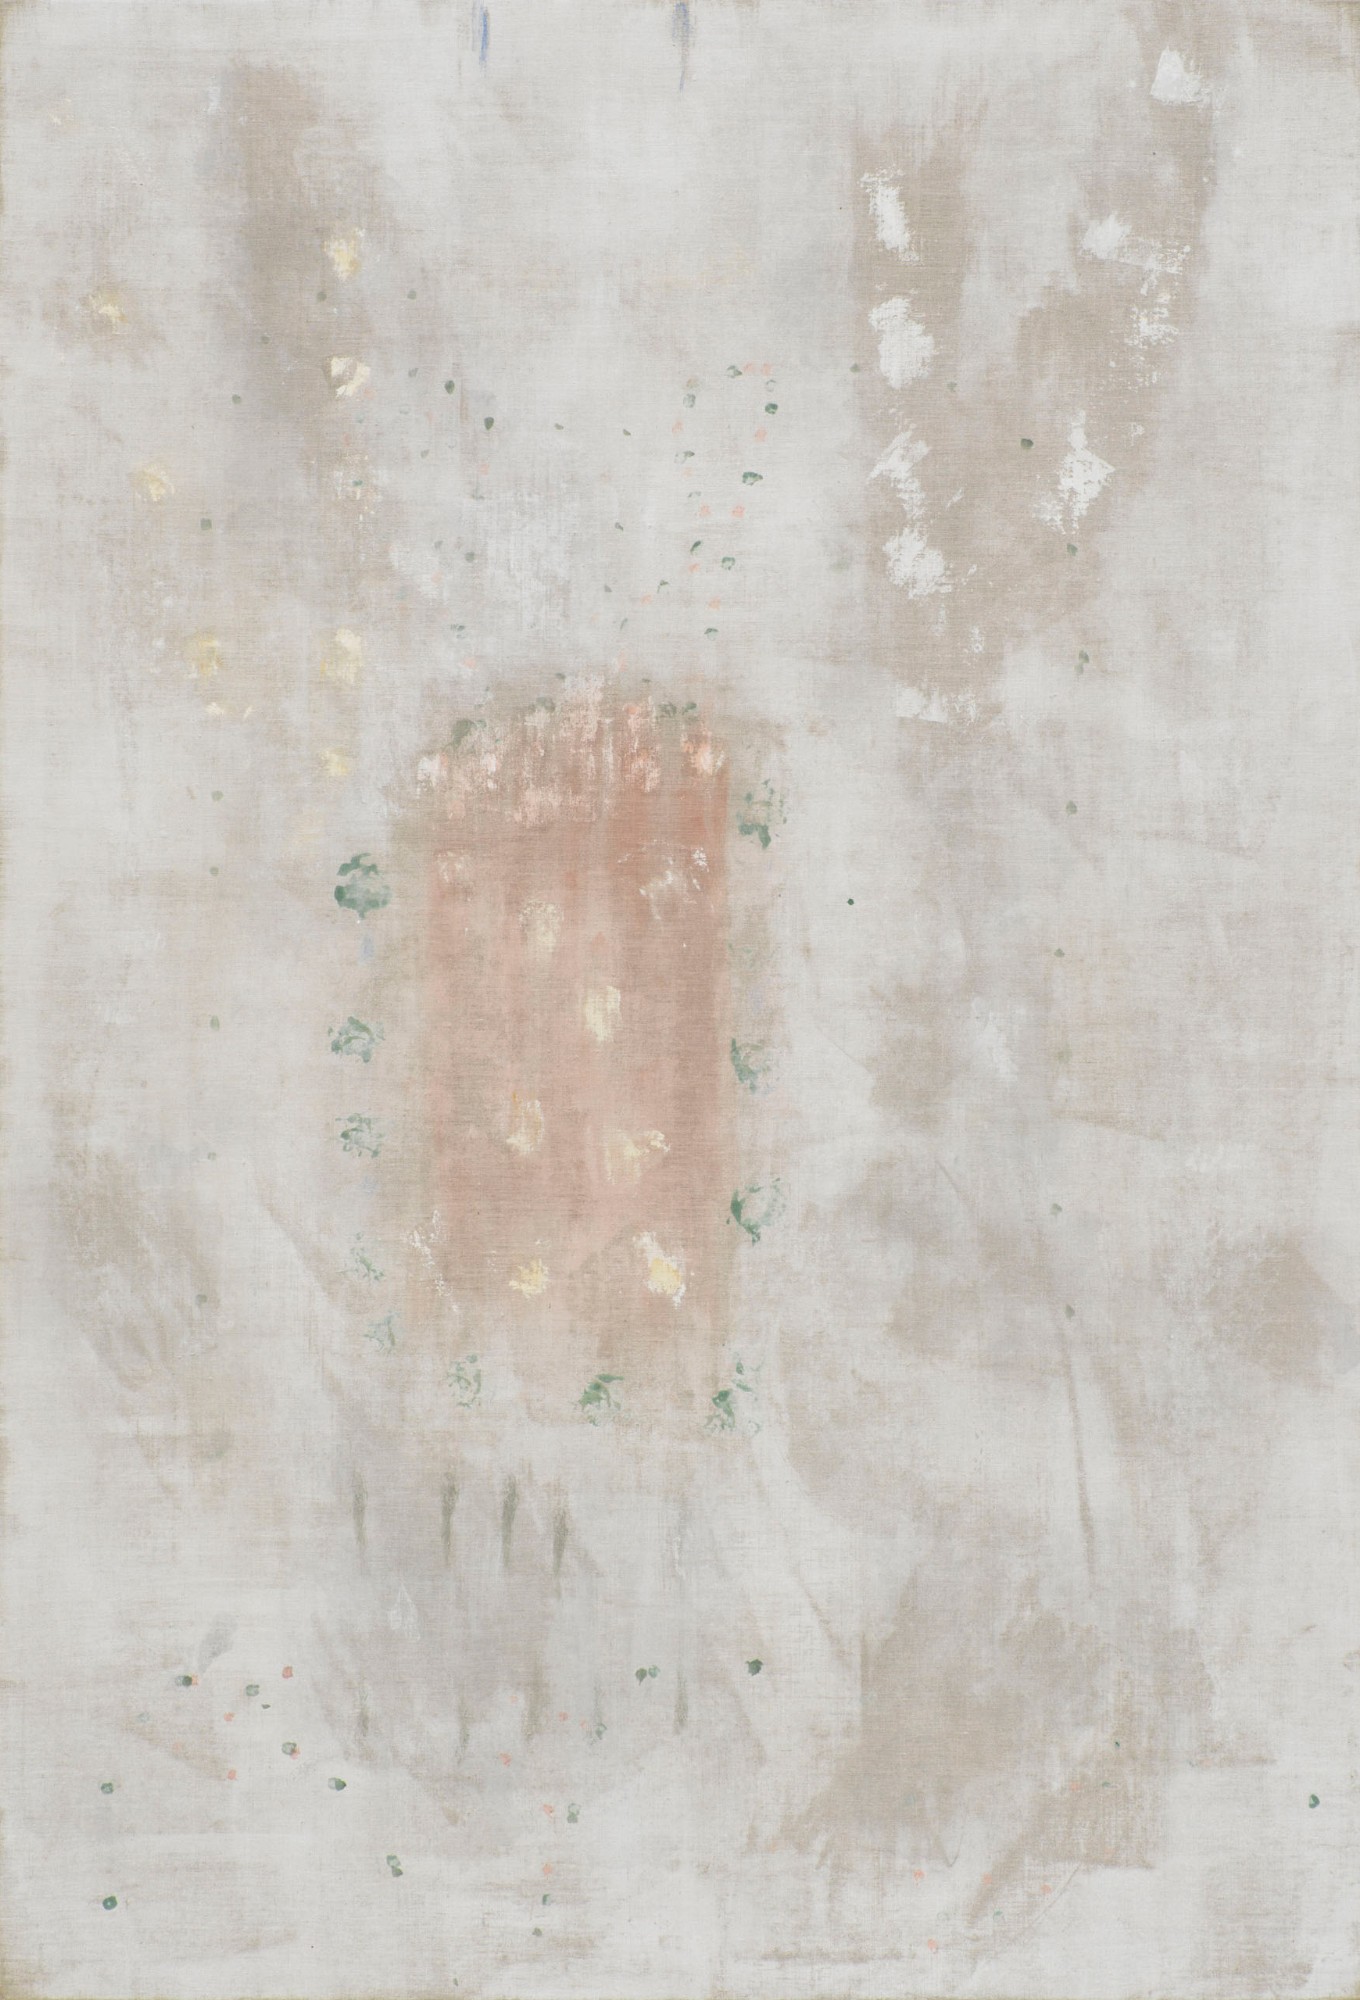 Erwin Gross, untitled, 2018, acrylic, pigment on canvas, 220 x 150 cm